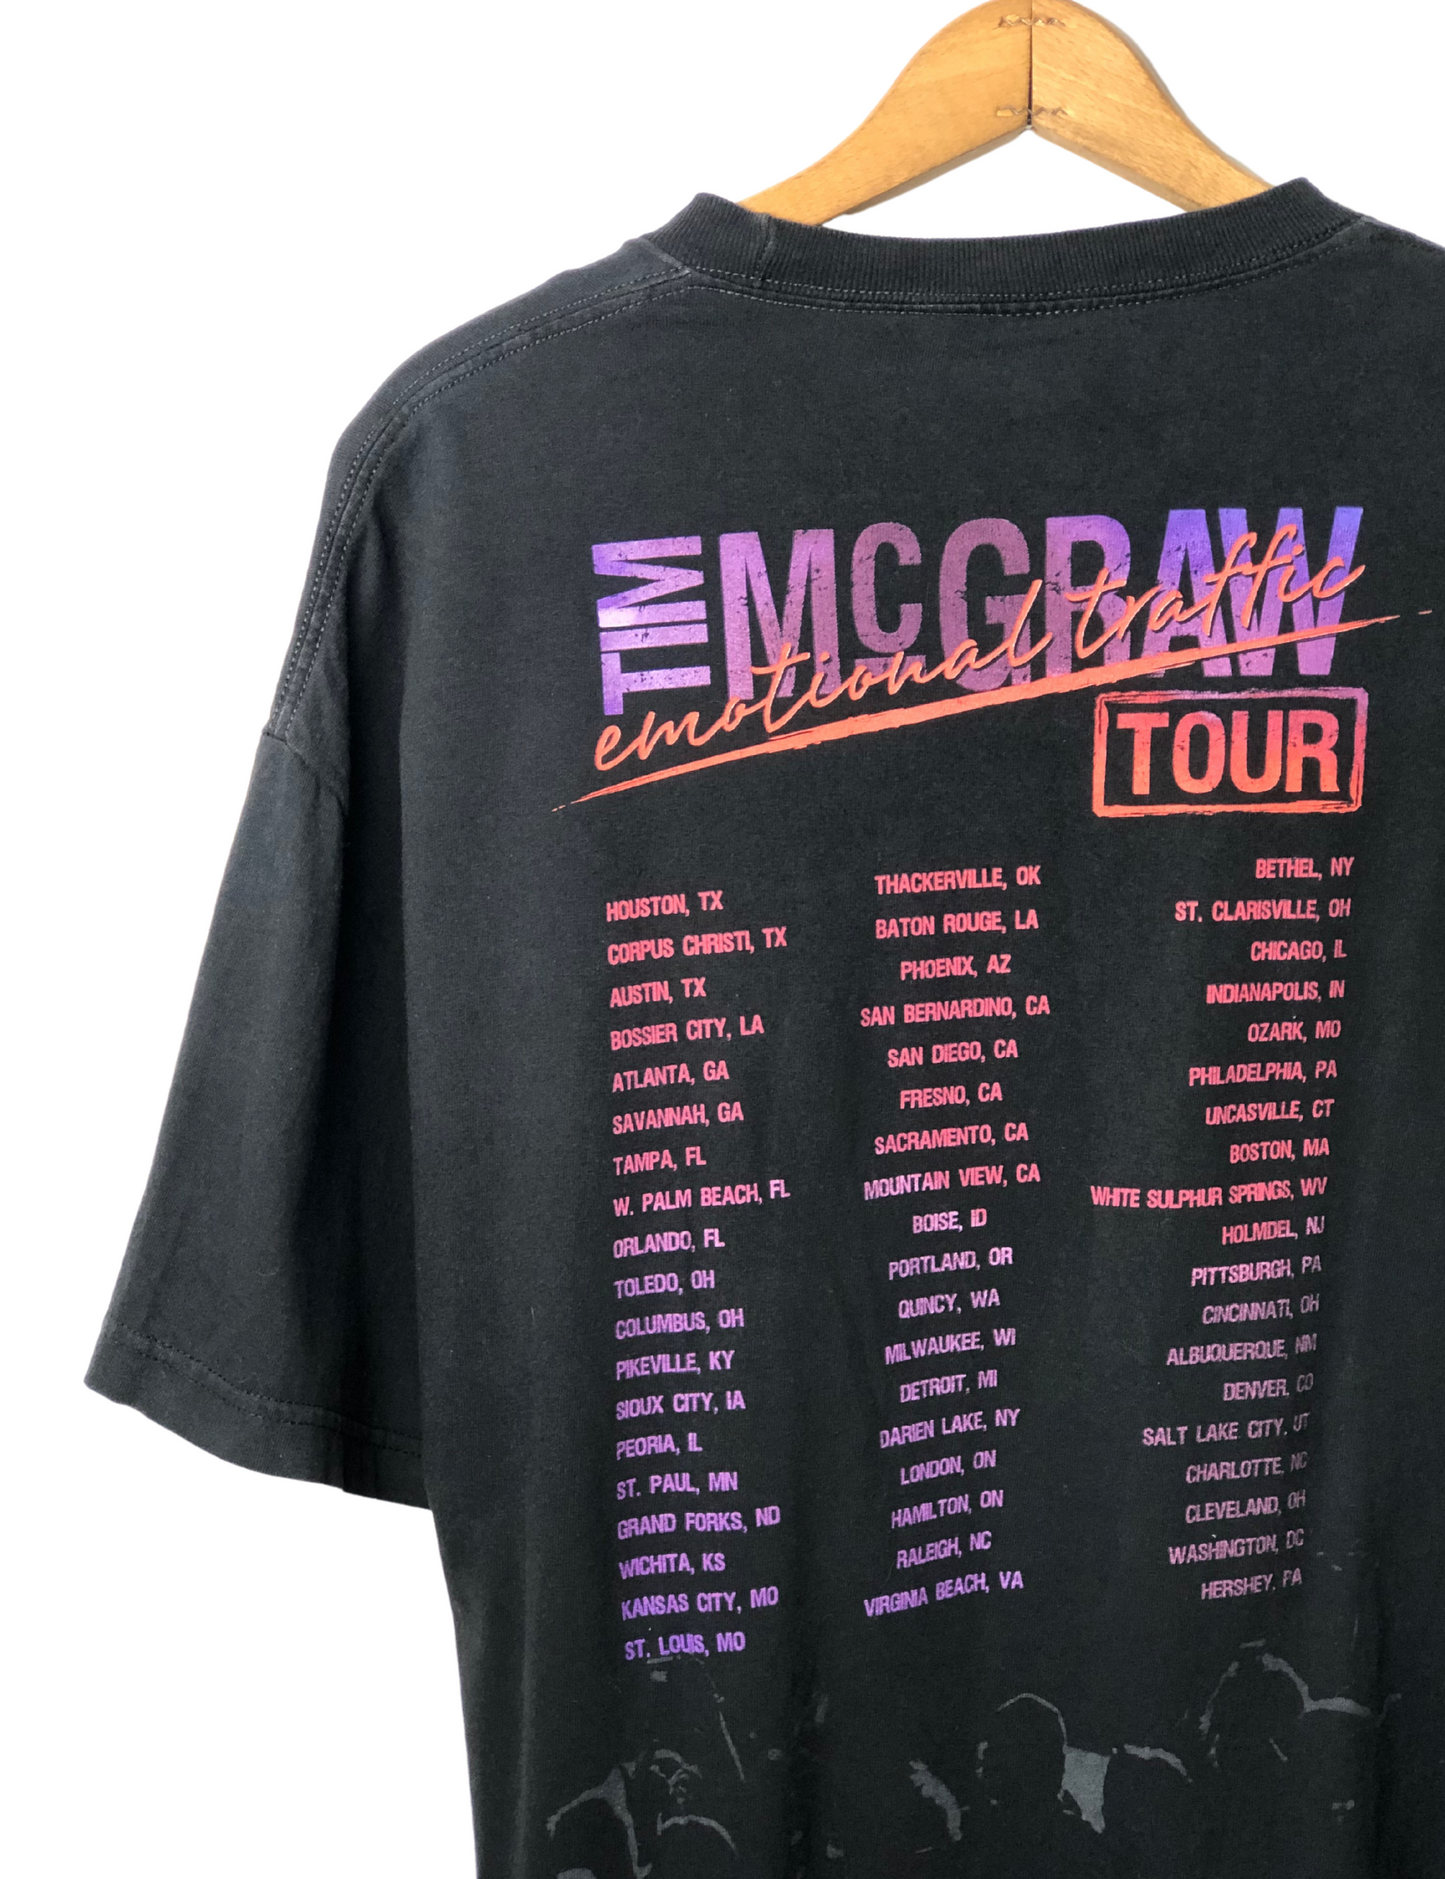 2012 Tim McGraw Emotional Traffic Tour Country Concert Tshirt Size XL